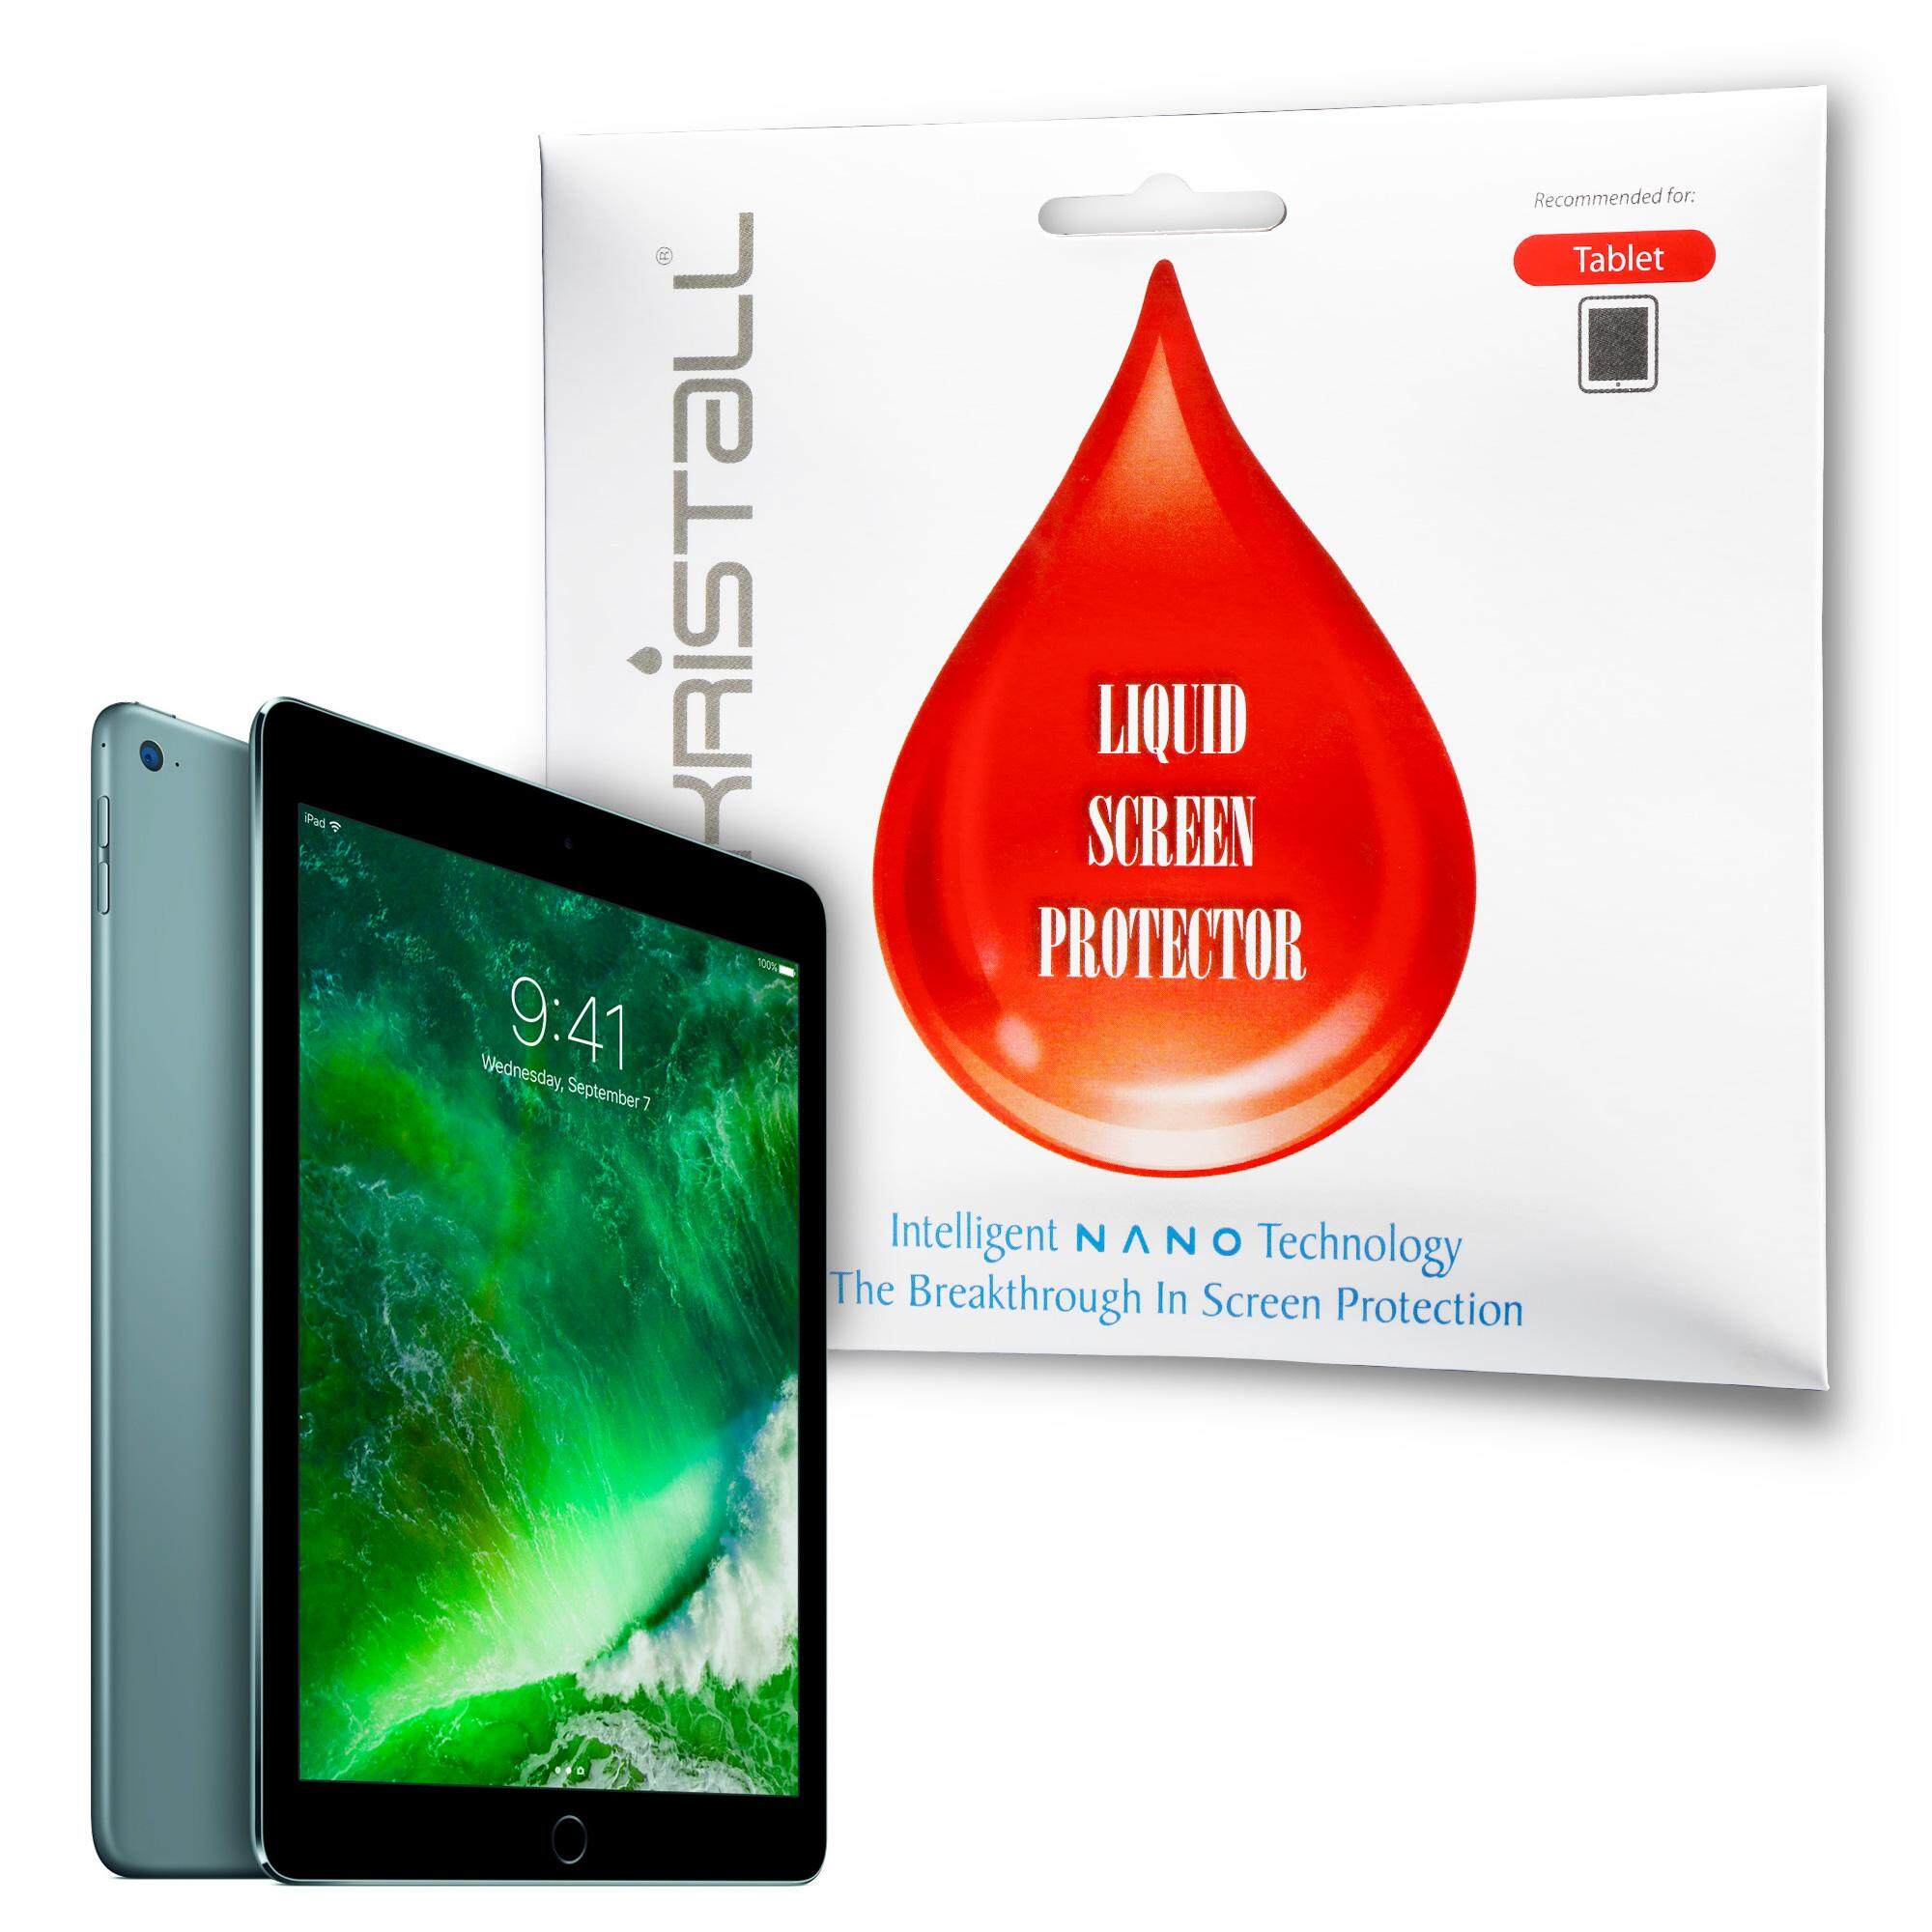 Apple iPad Mini 4 Screen Protector - Kristall® Nano Liquid Screen Protector (Bubble-FREE Screen Protector, 9H Hardness, Scratch Resistant)